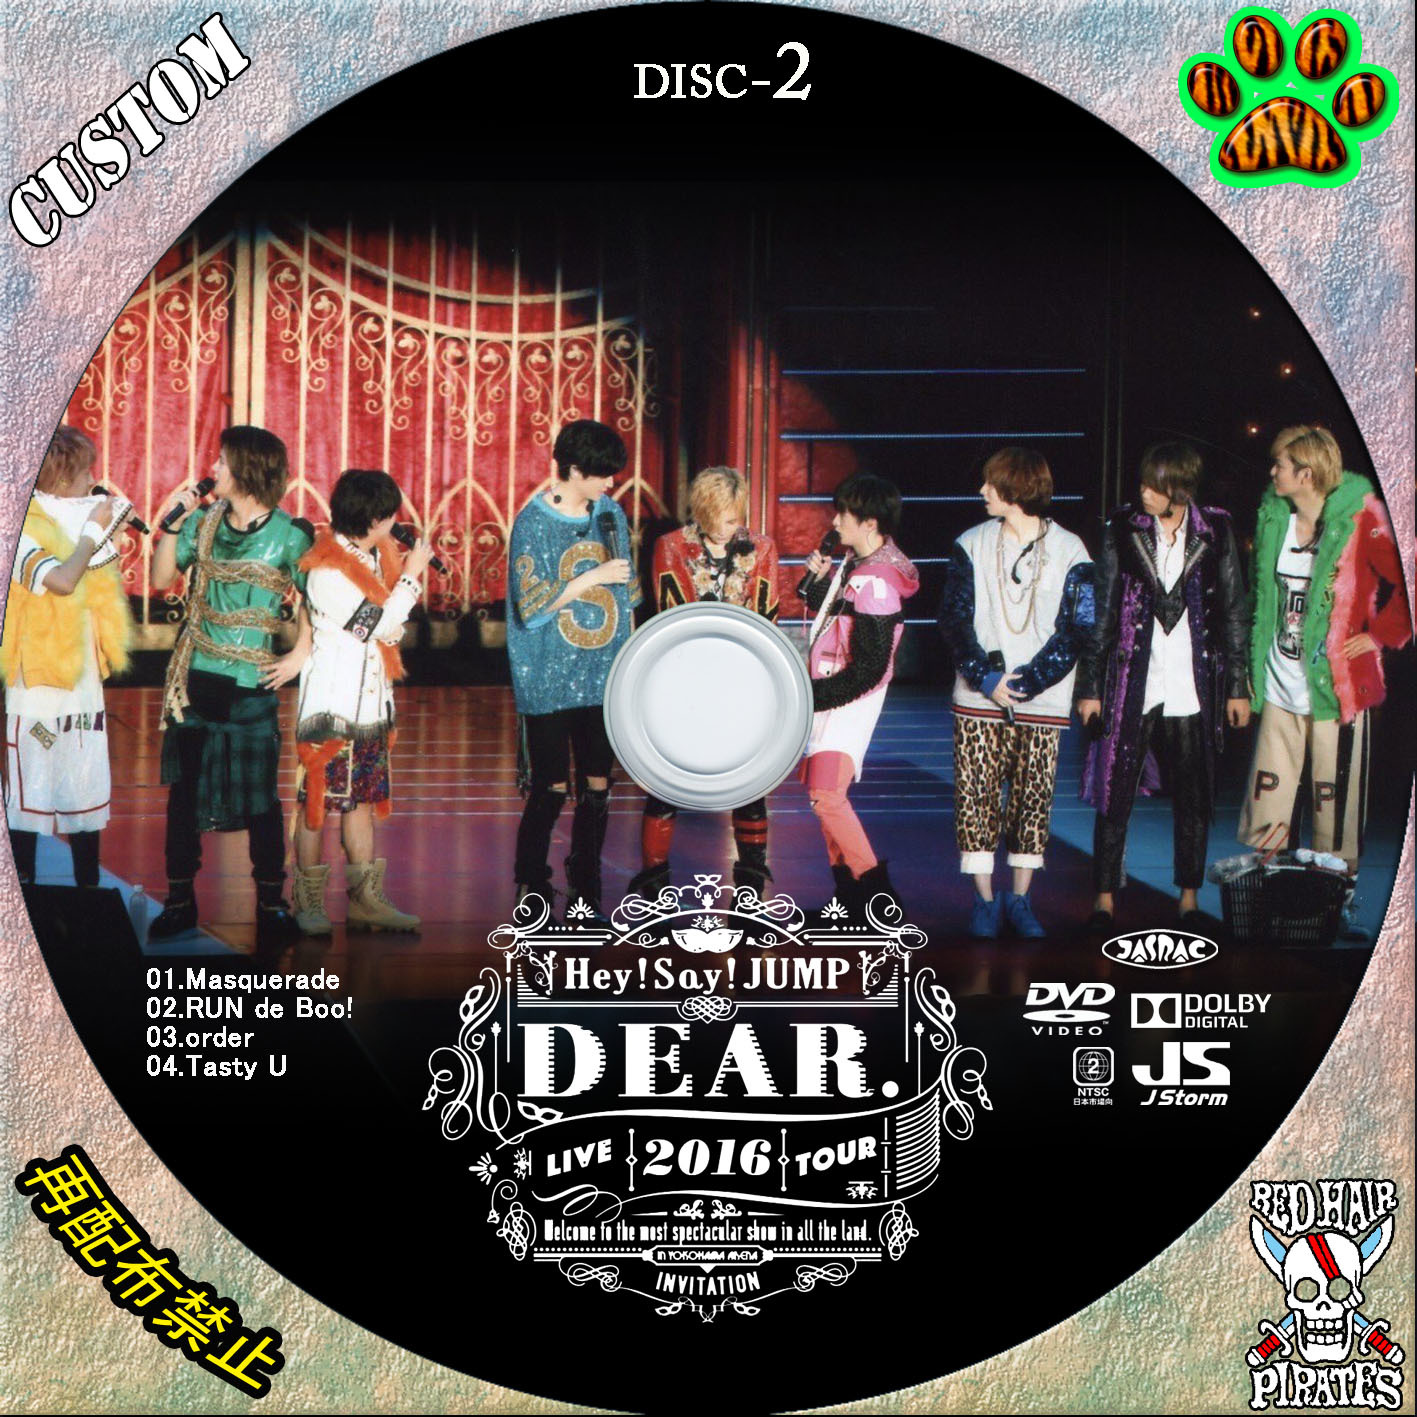 Hey!Say!JUMP ライブ DVD DEAR. 通常盤 - ブルーレイ